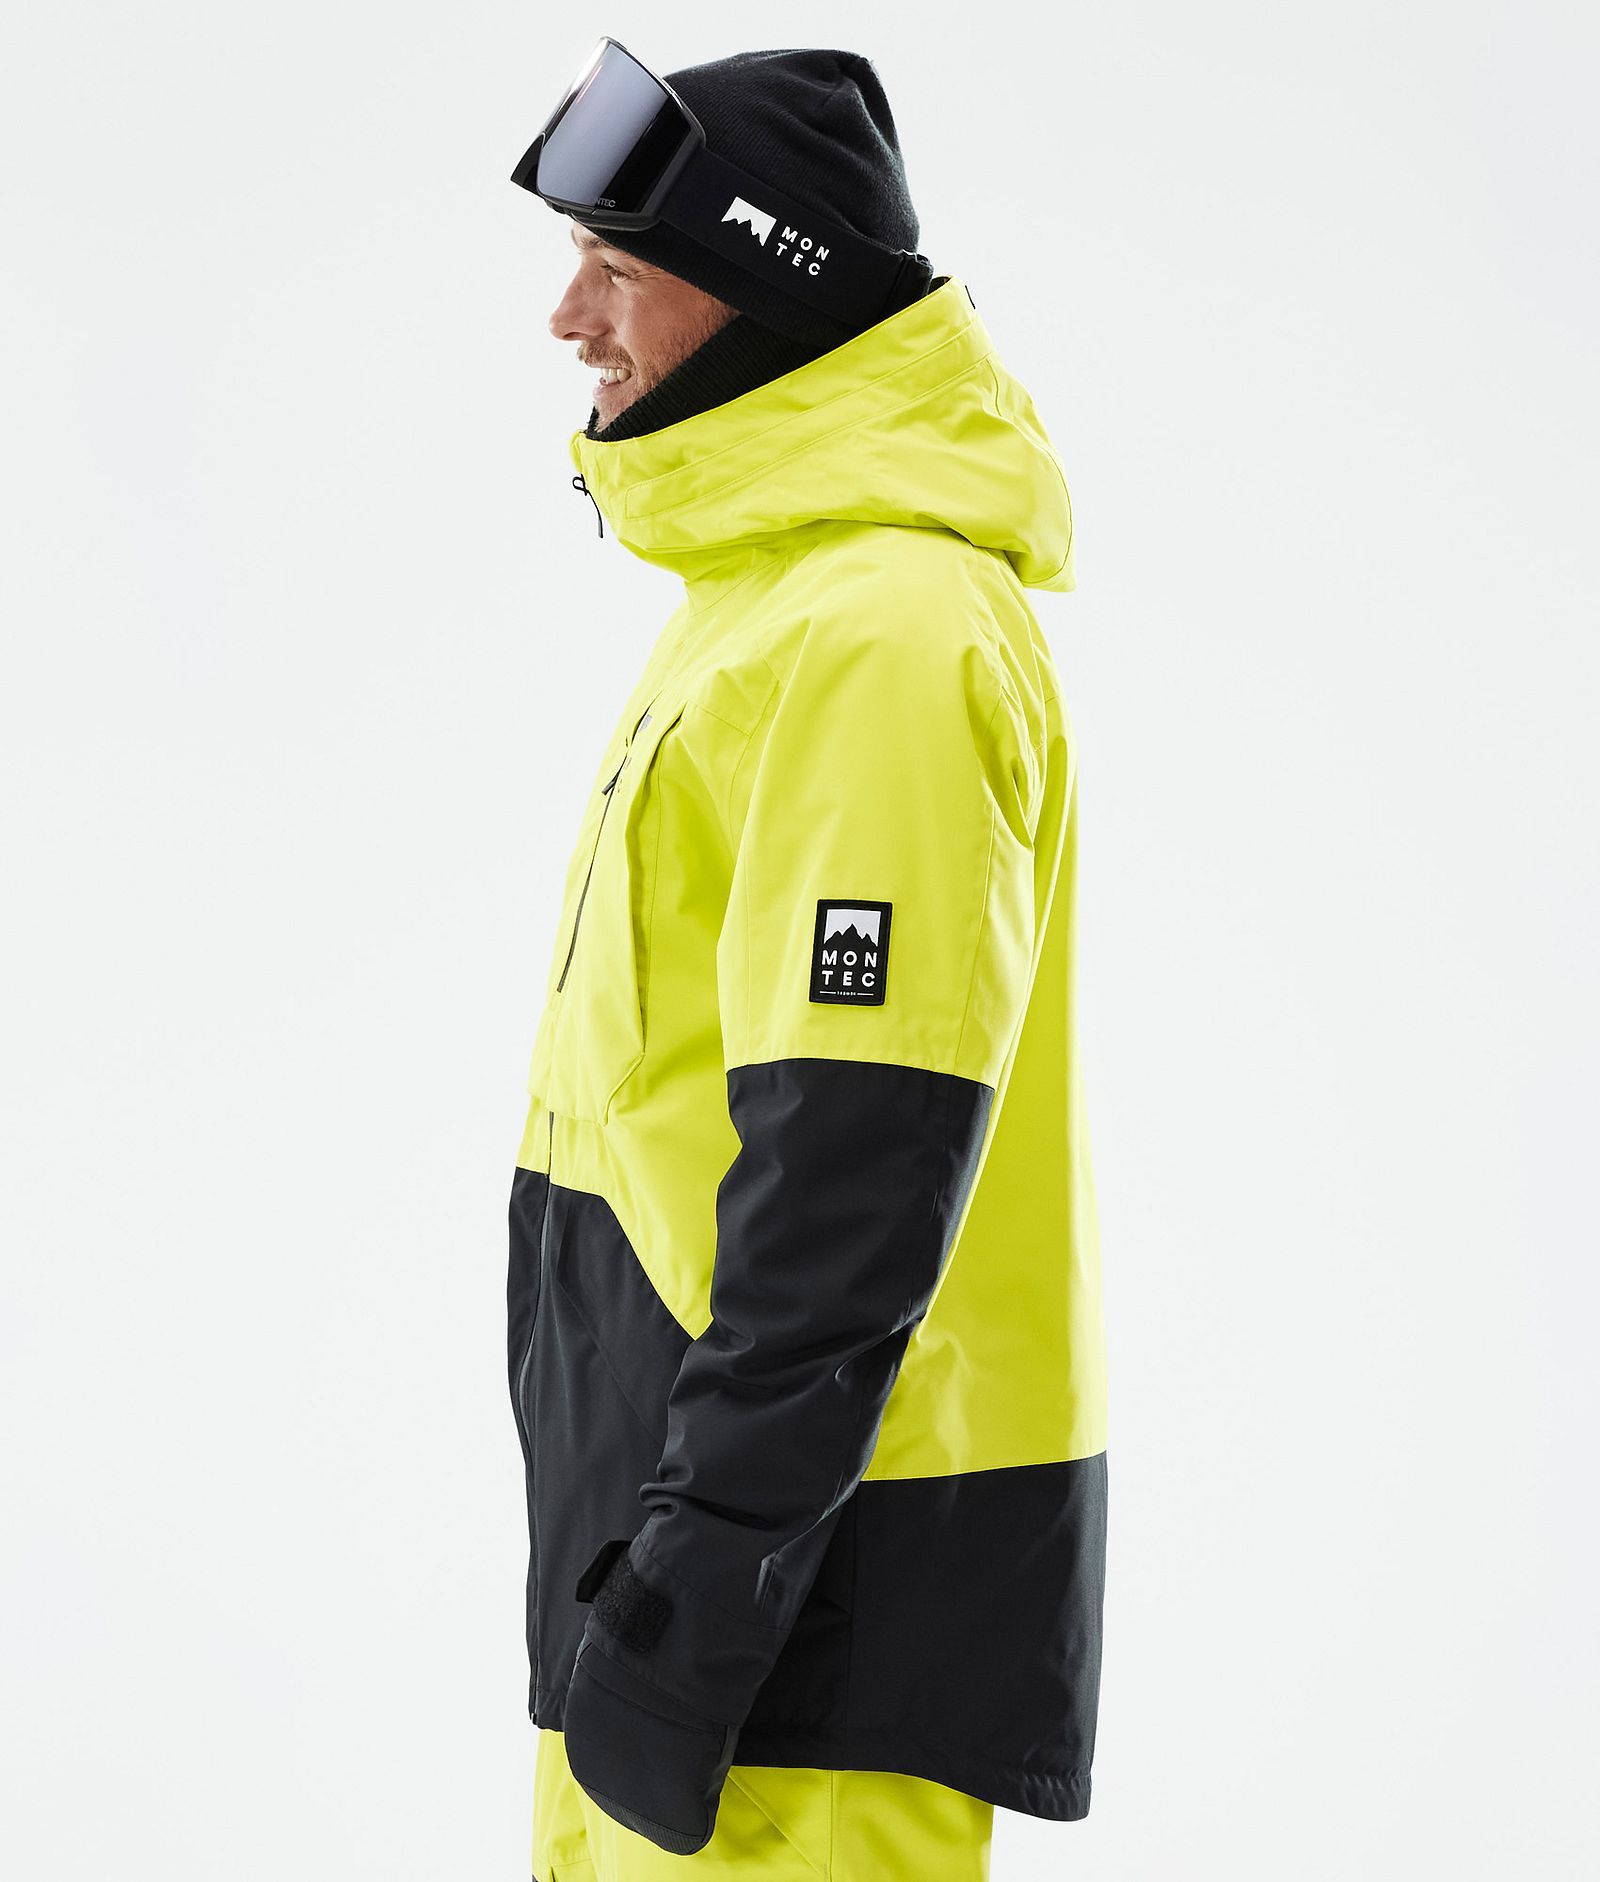 Montec Arch Snowboard Jacket Men Bright Yellow/Black